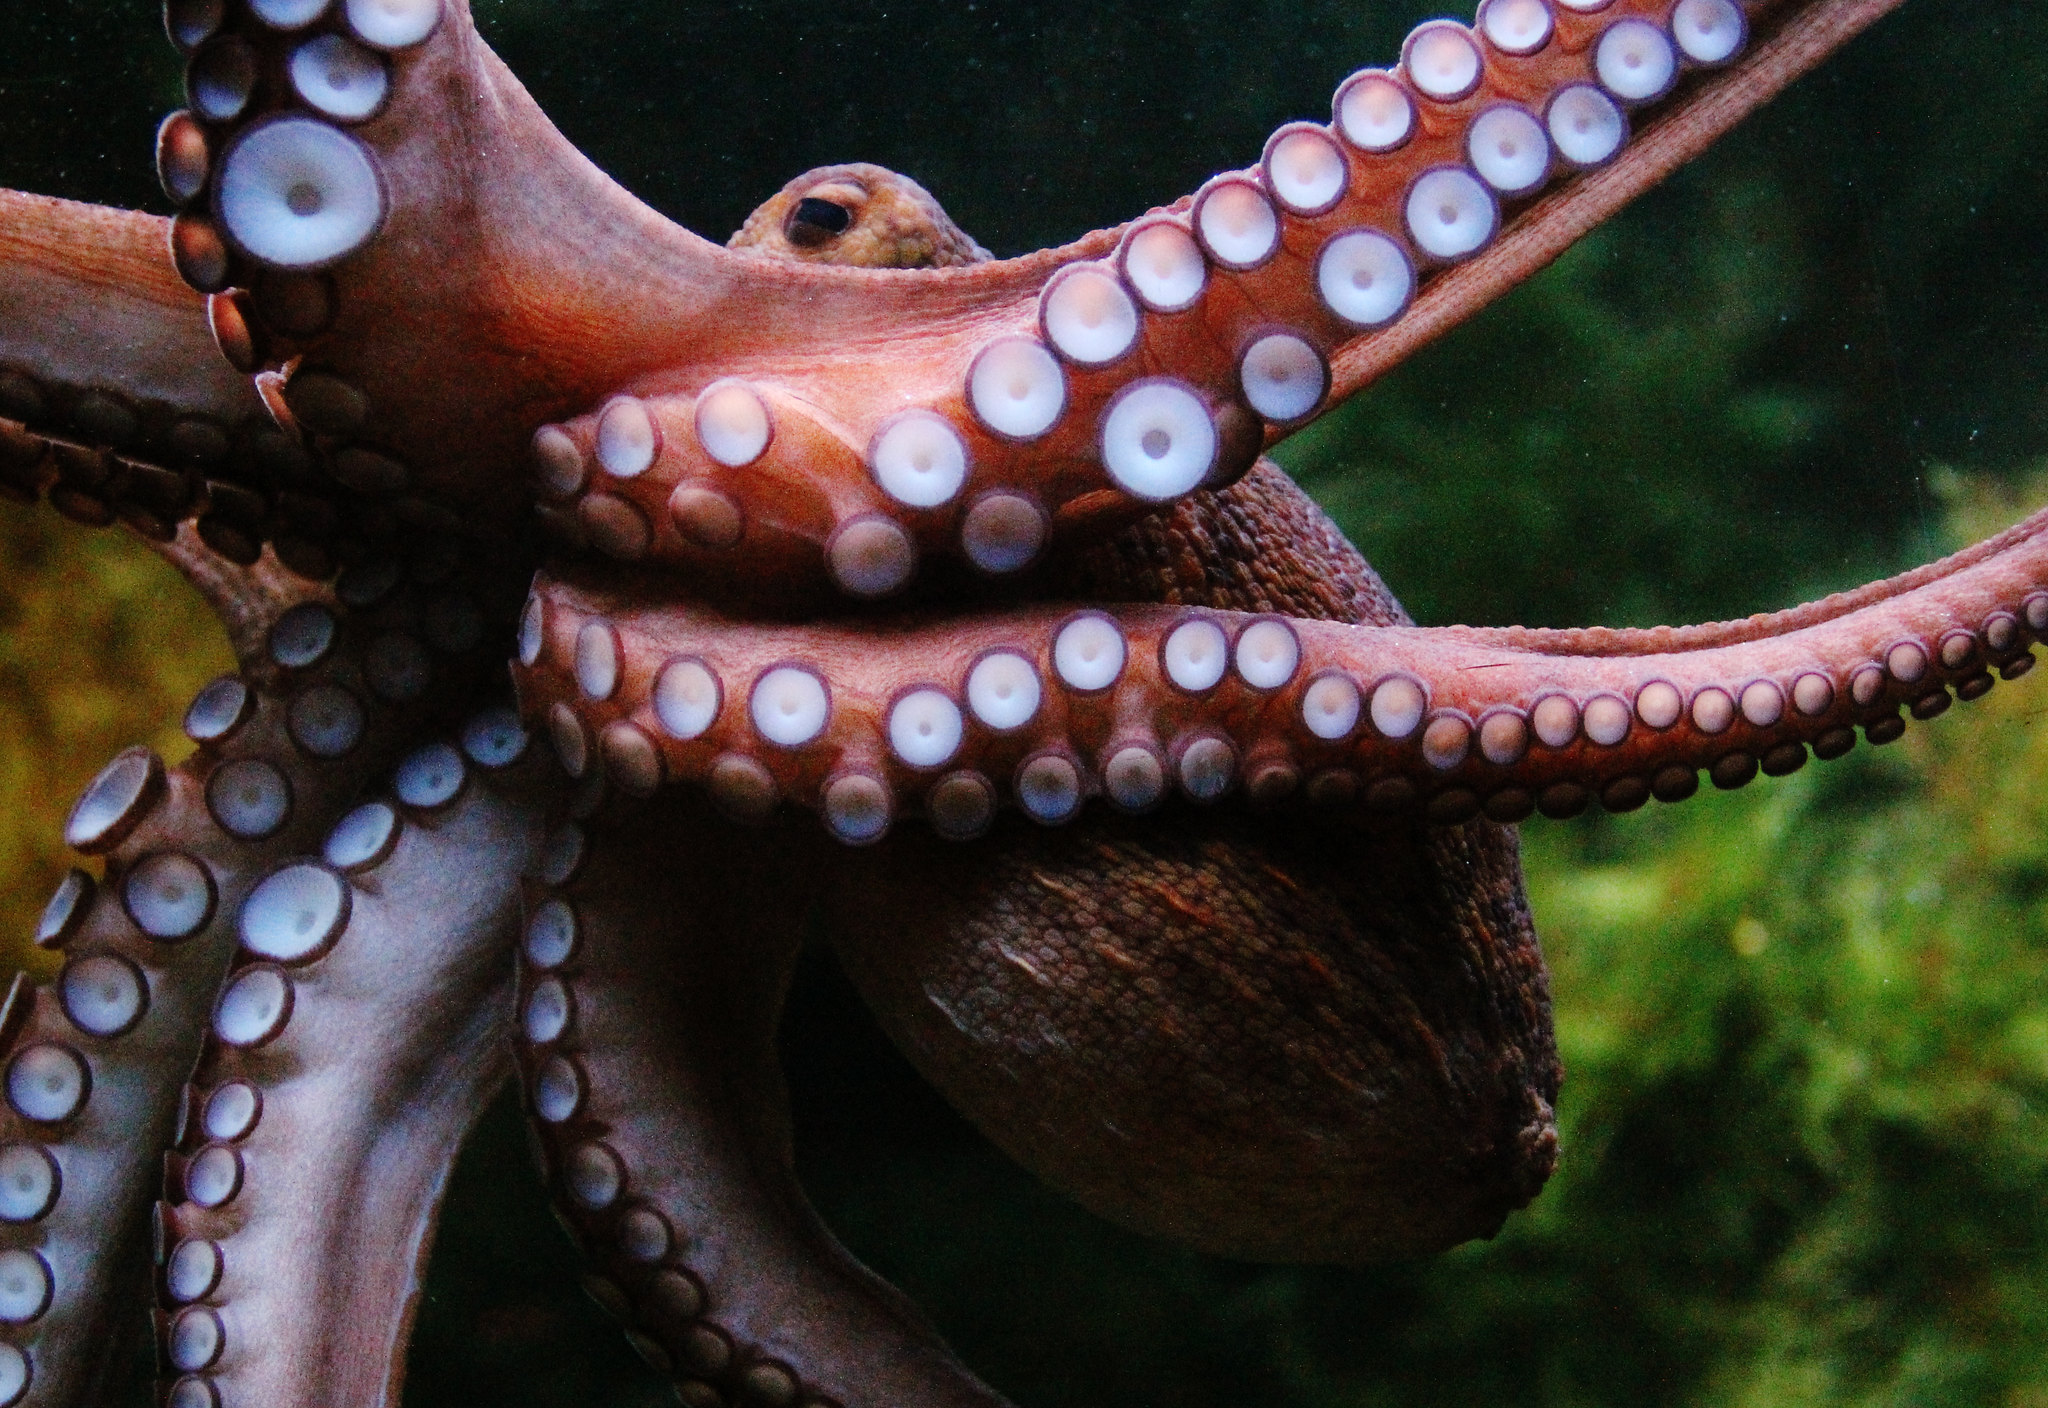 Octopus (by damn_unique CC BY-SA 2.0 DEED via Flickr).